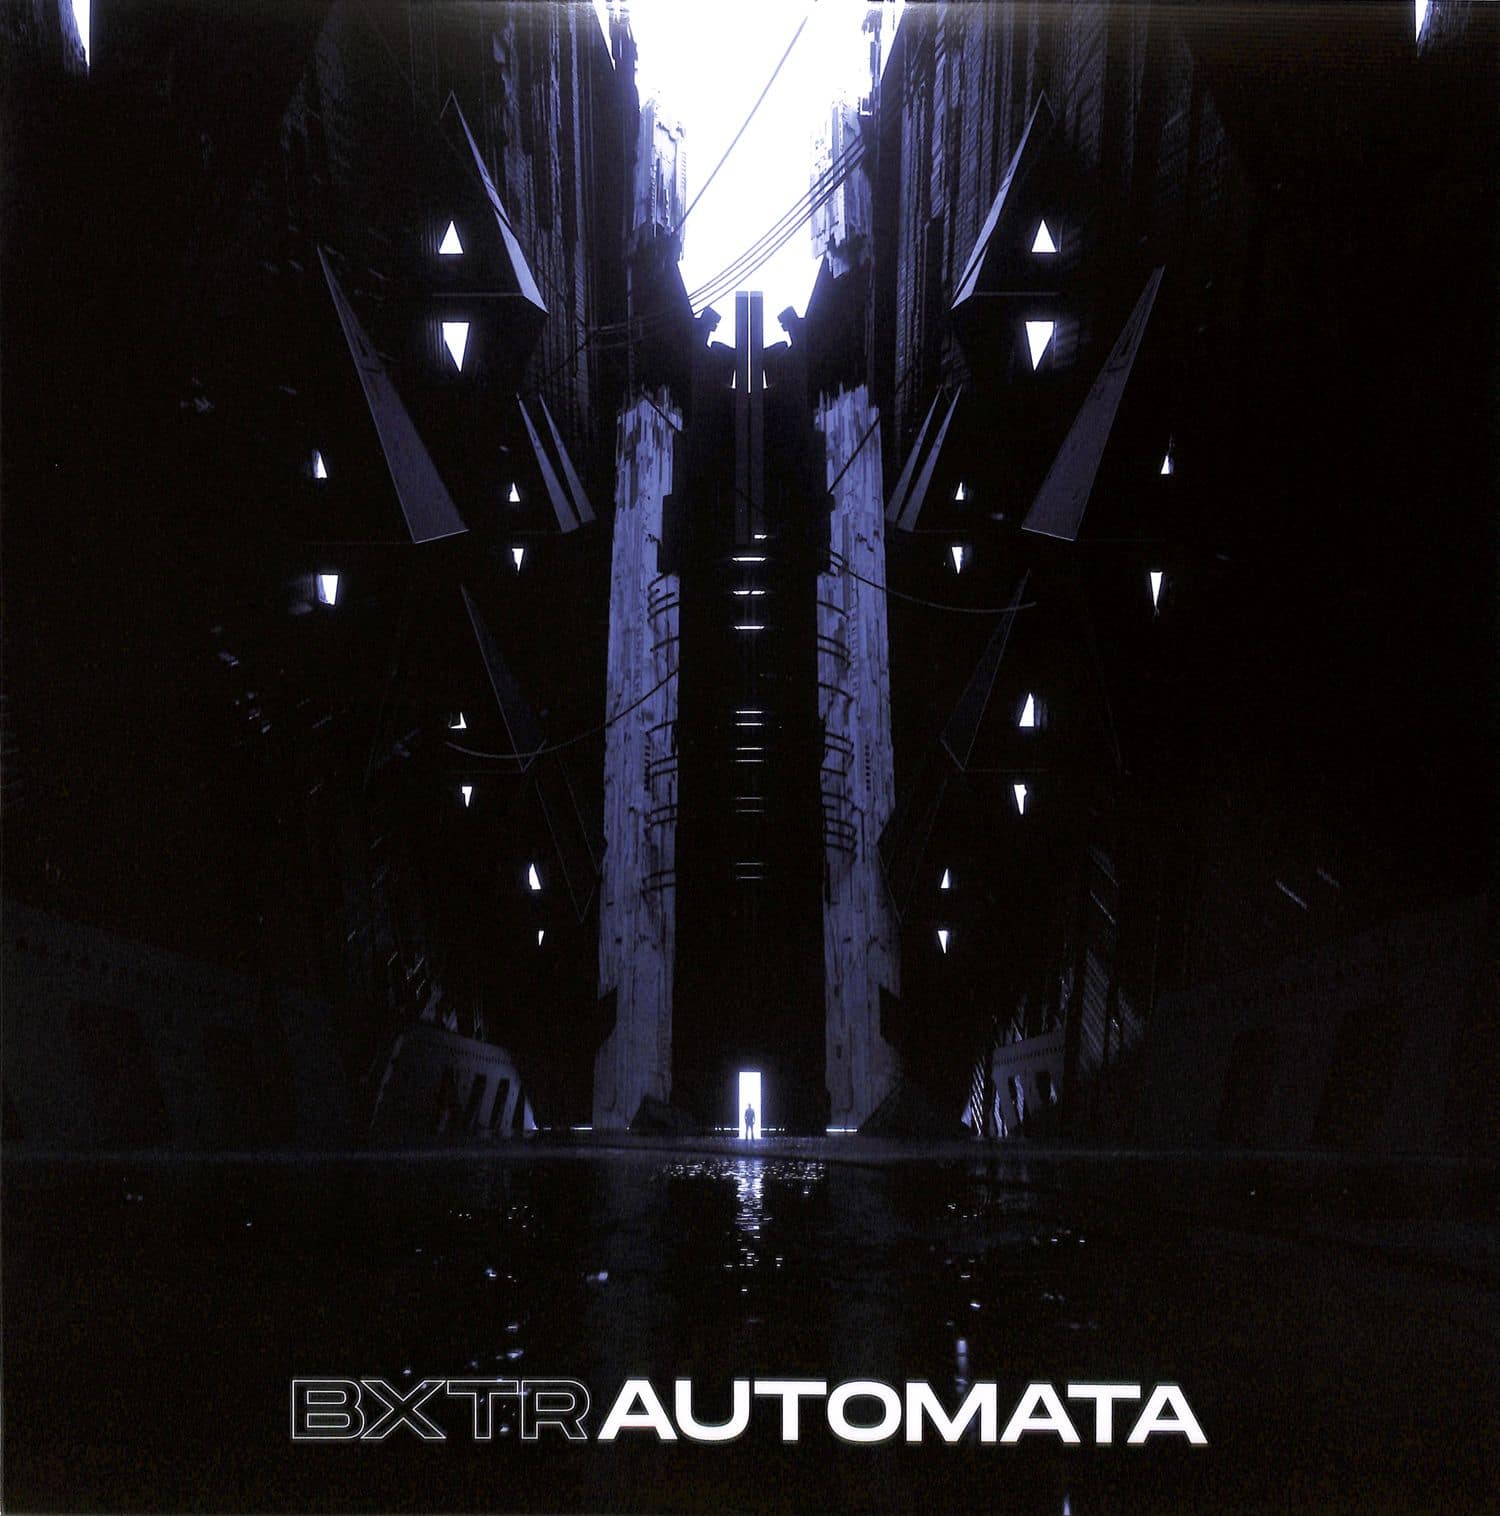 BXTR - AUTOMATA EP